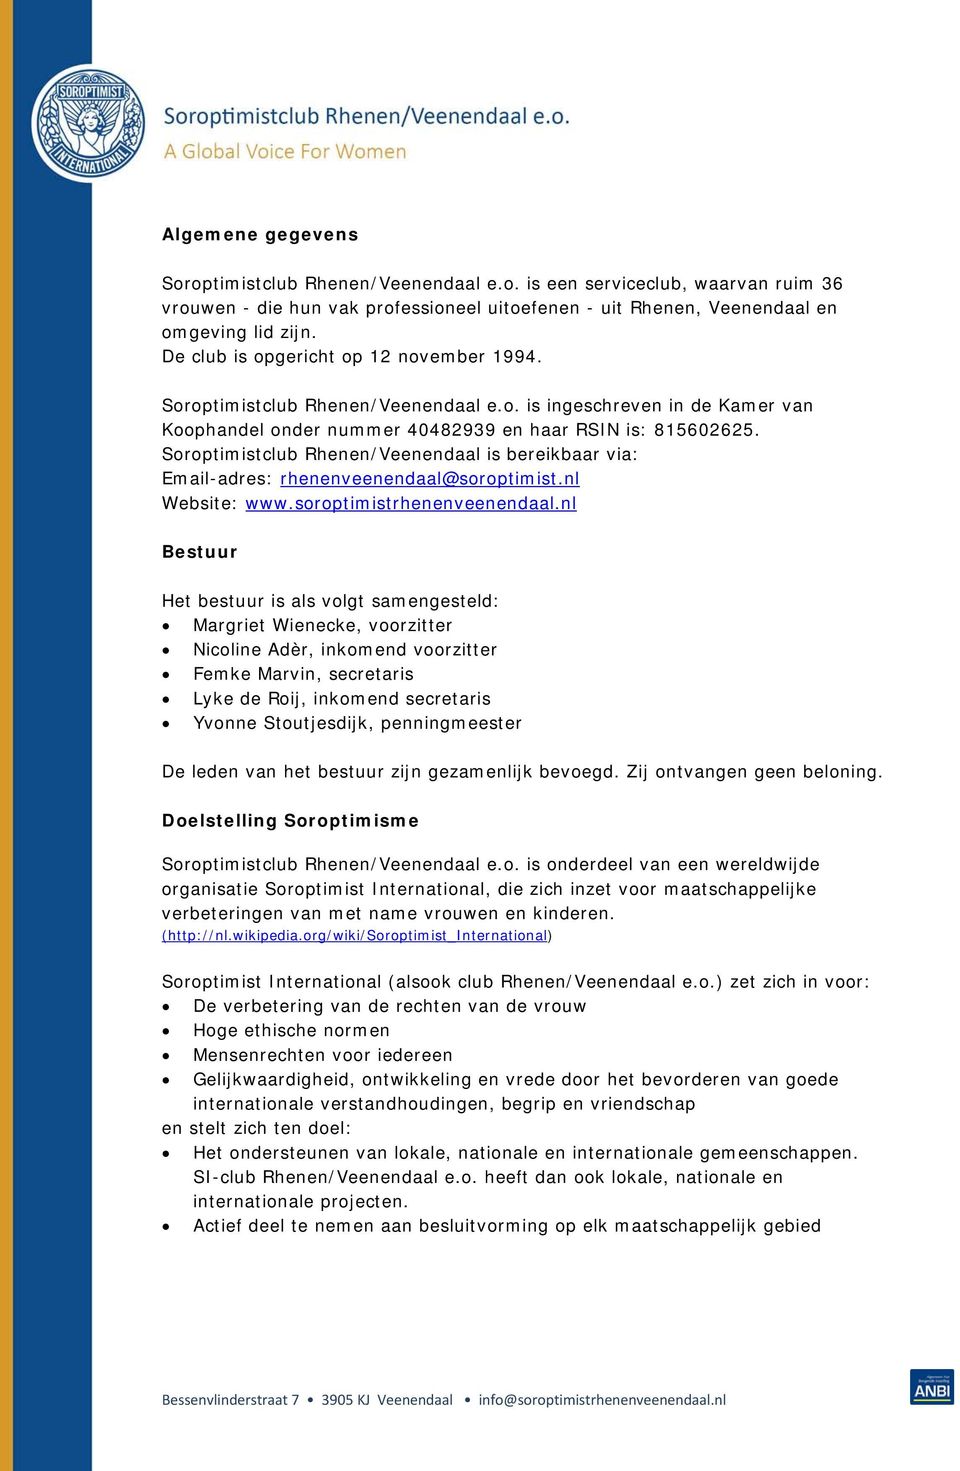 Soroptimistclub Rhenen/Veenendaal is bereikbaar via: Email-adres: rhenenveenendaal@soroptimist.nl Website: www.soroptimistrhenenveenendaal.